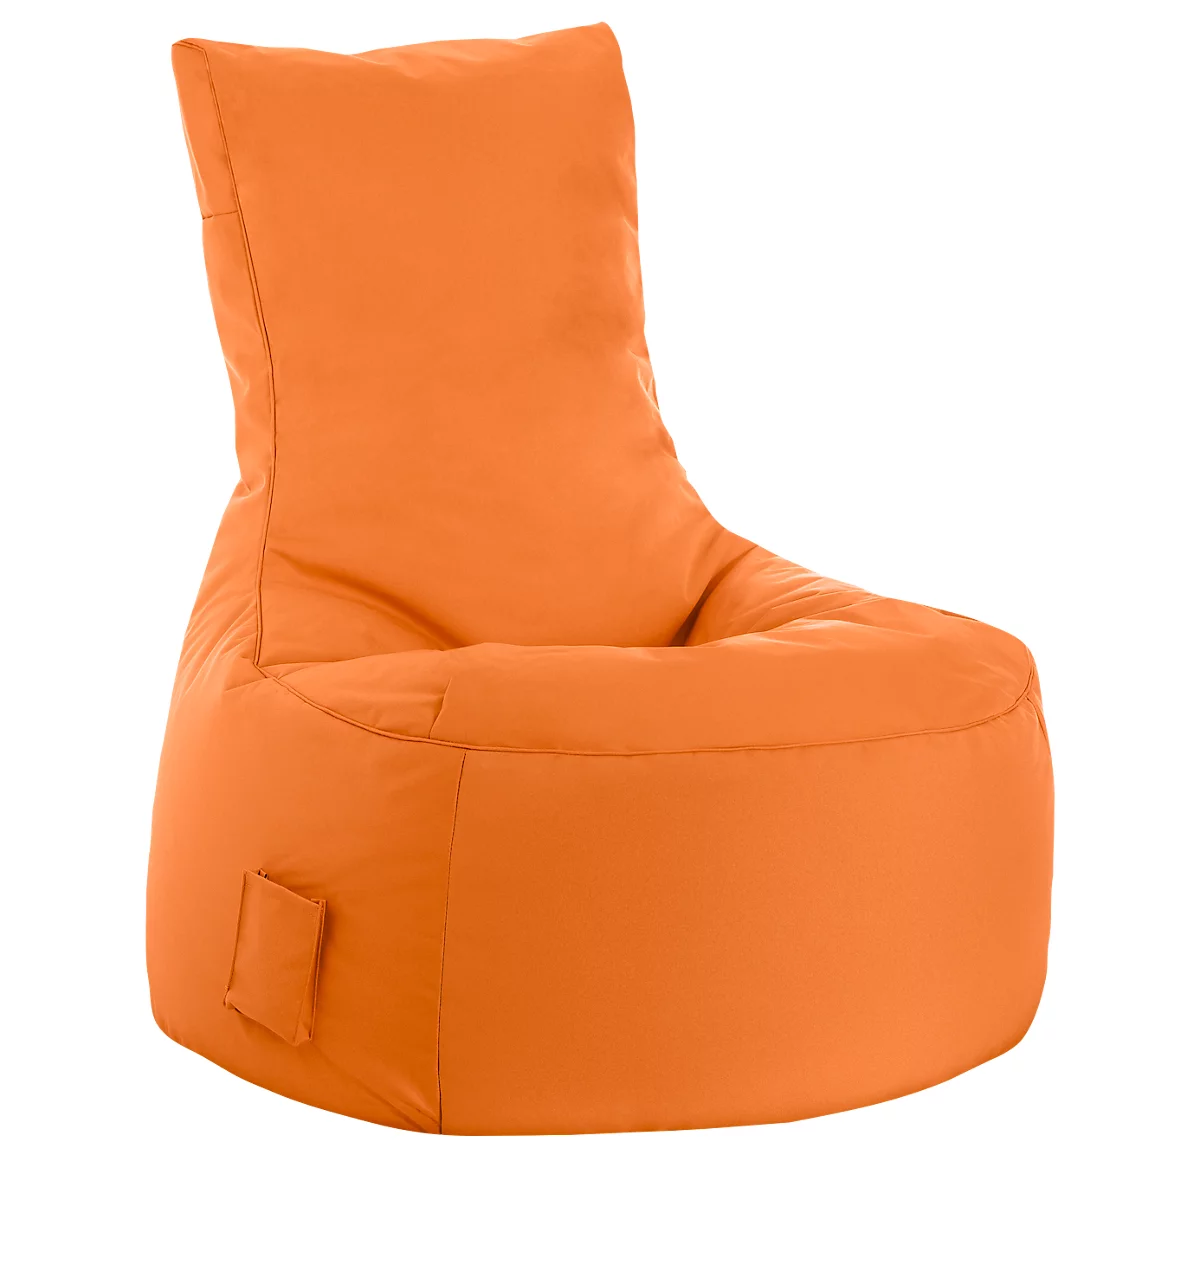 Sitzsack swing scuba®, 100% Polyester, abwaschbar, B 650 x T 900 x H 950 mm, orange